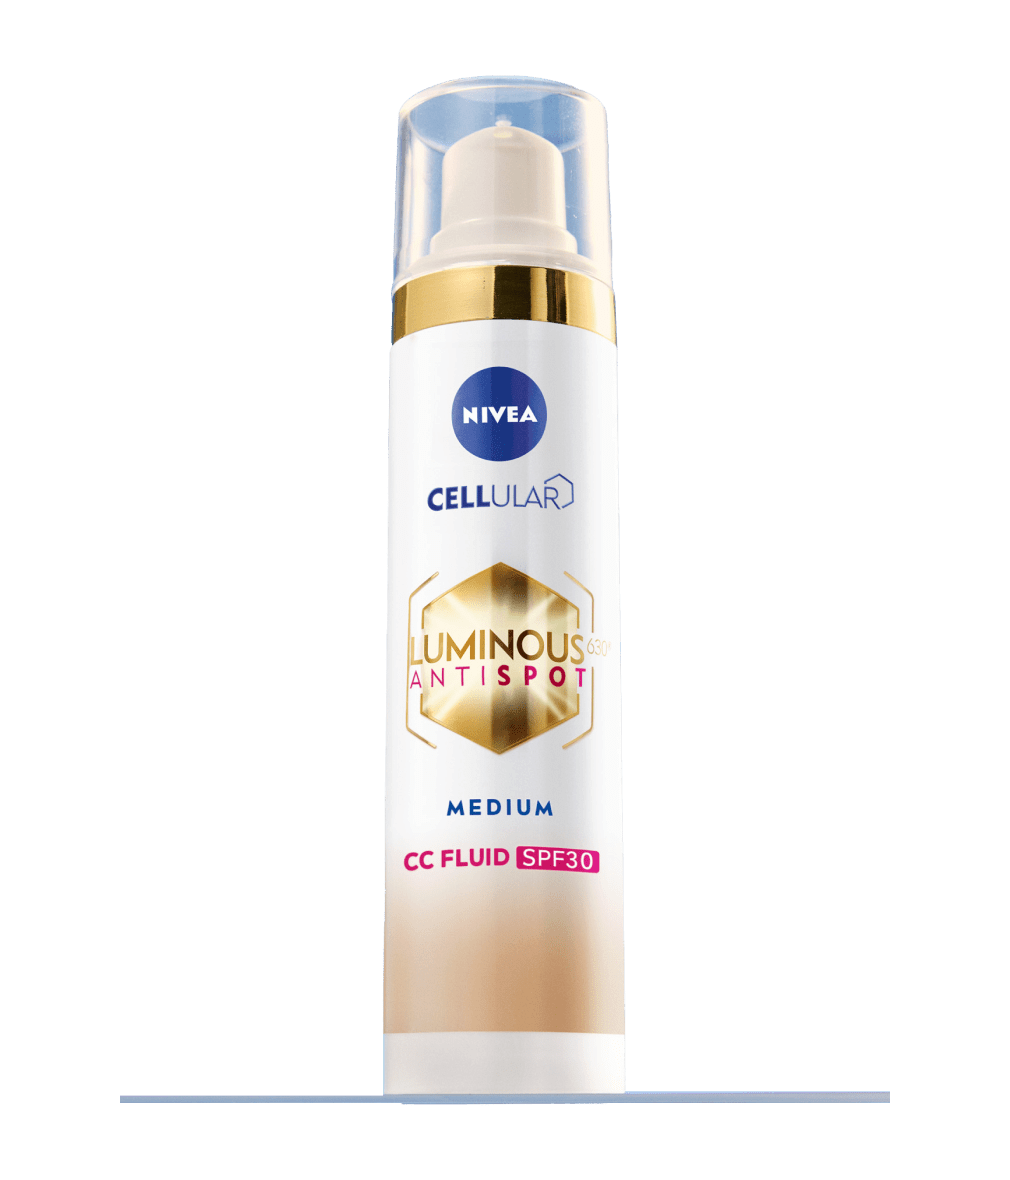 a product packshot of LUMINOUS630® 3-in-1 CC Fluid for medium skin